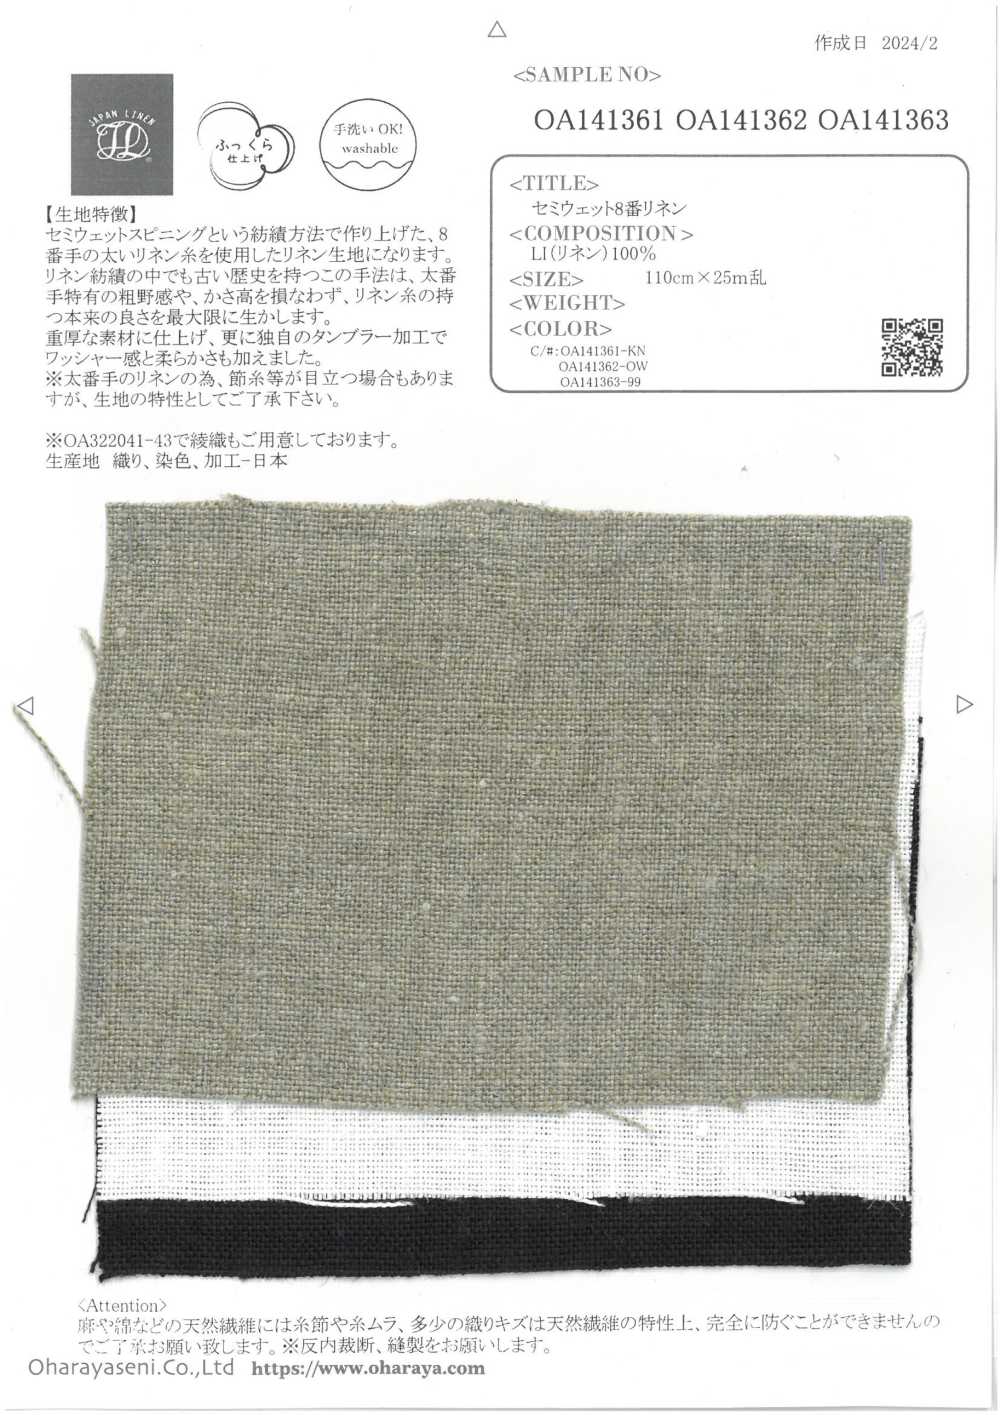 OA141362 Halbfeuchtes Leinen Nr. 8[Textilgewebe] Oharayaseni